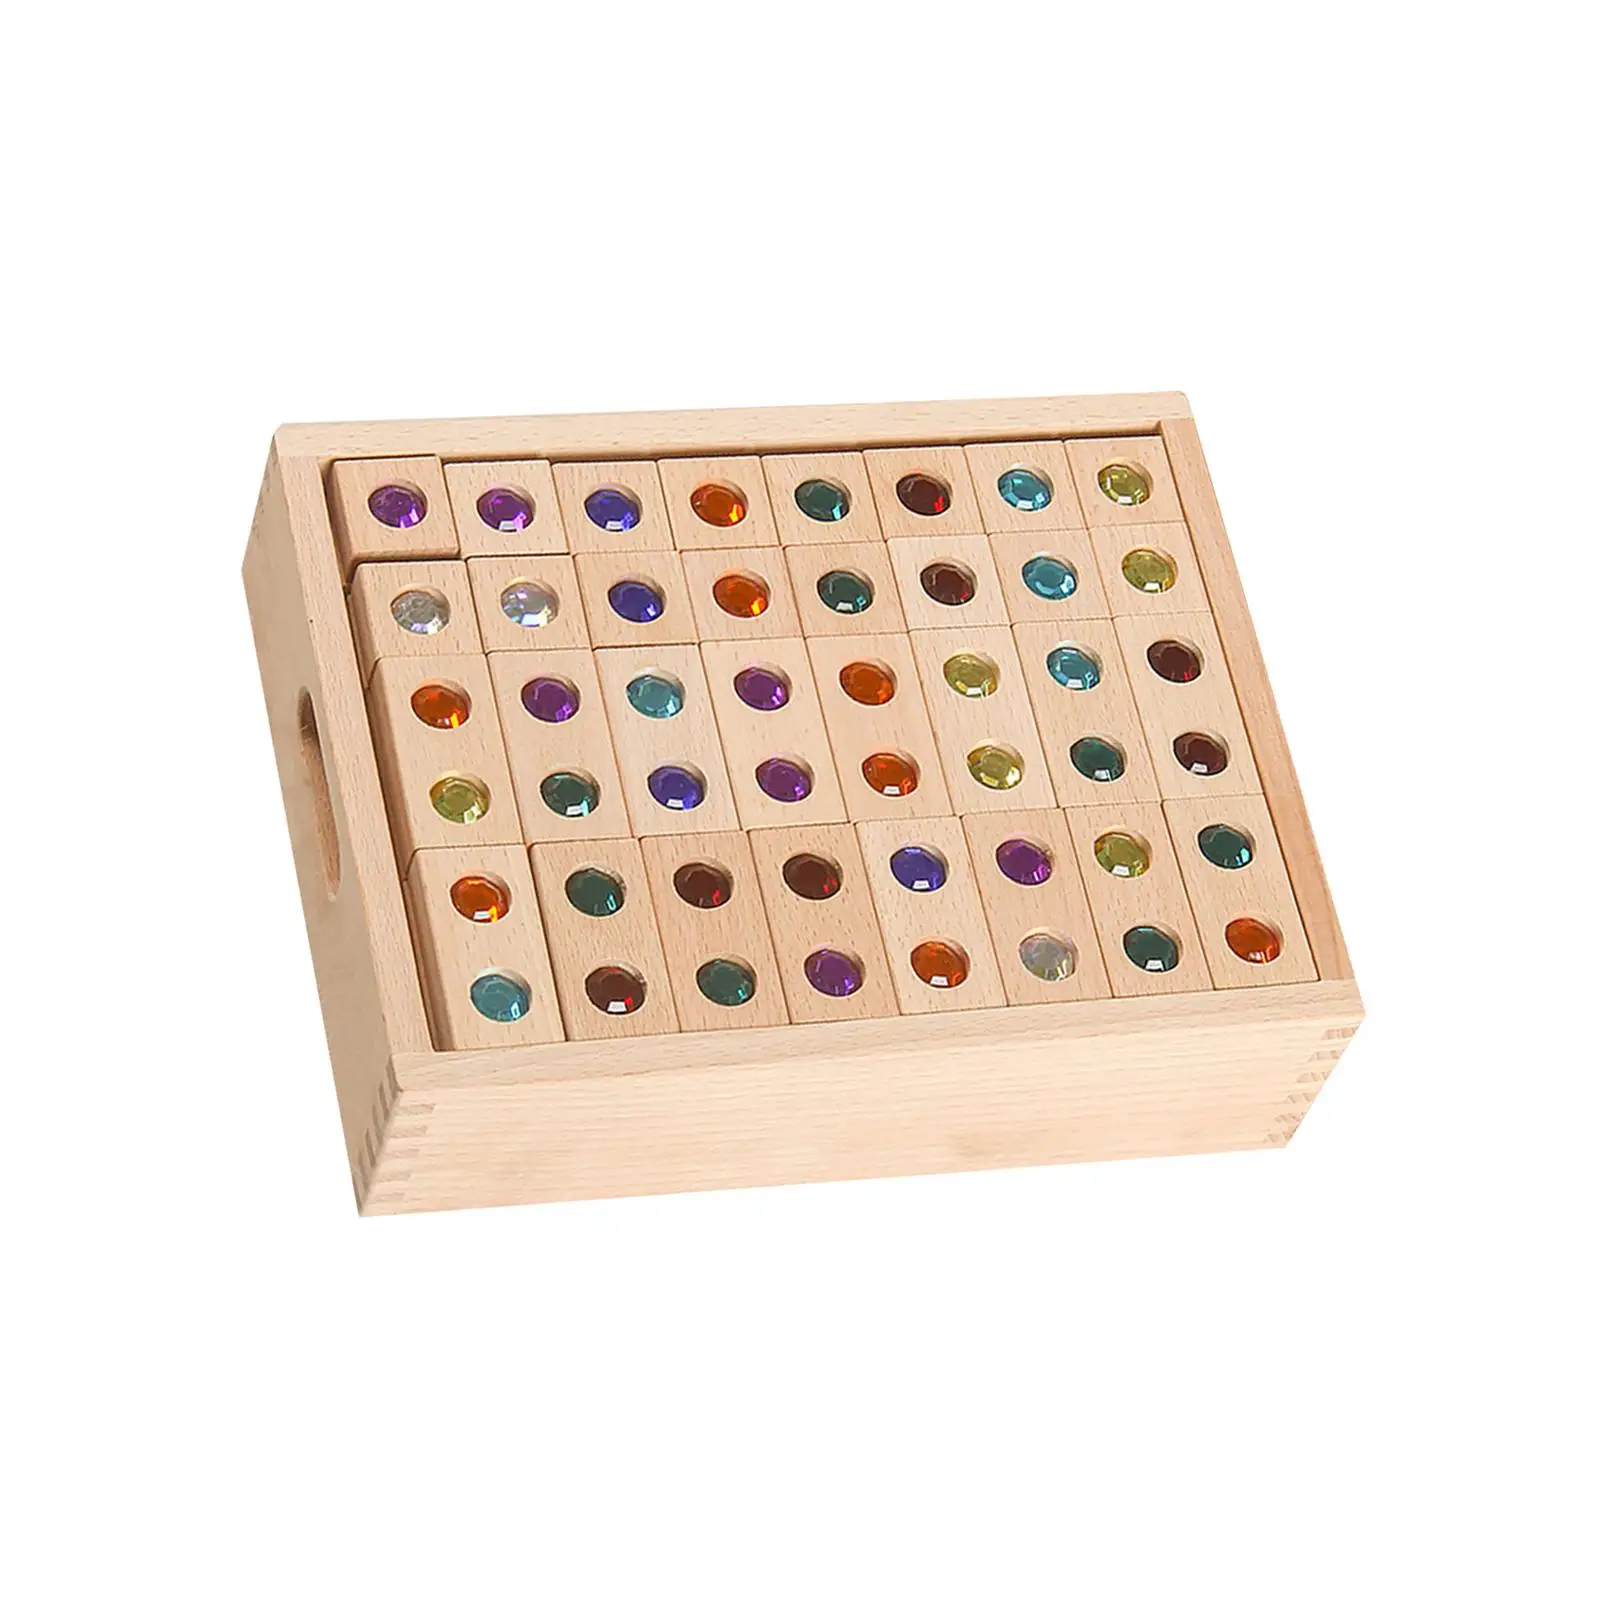 128x Rainbow Stacking Montessori Toys Wooden Building Blocks Rainbow Blocks for Toddlers Kids Preschool Girls Boys Baby